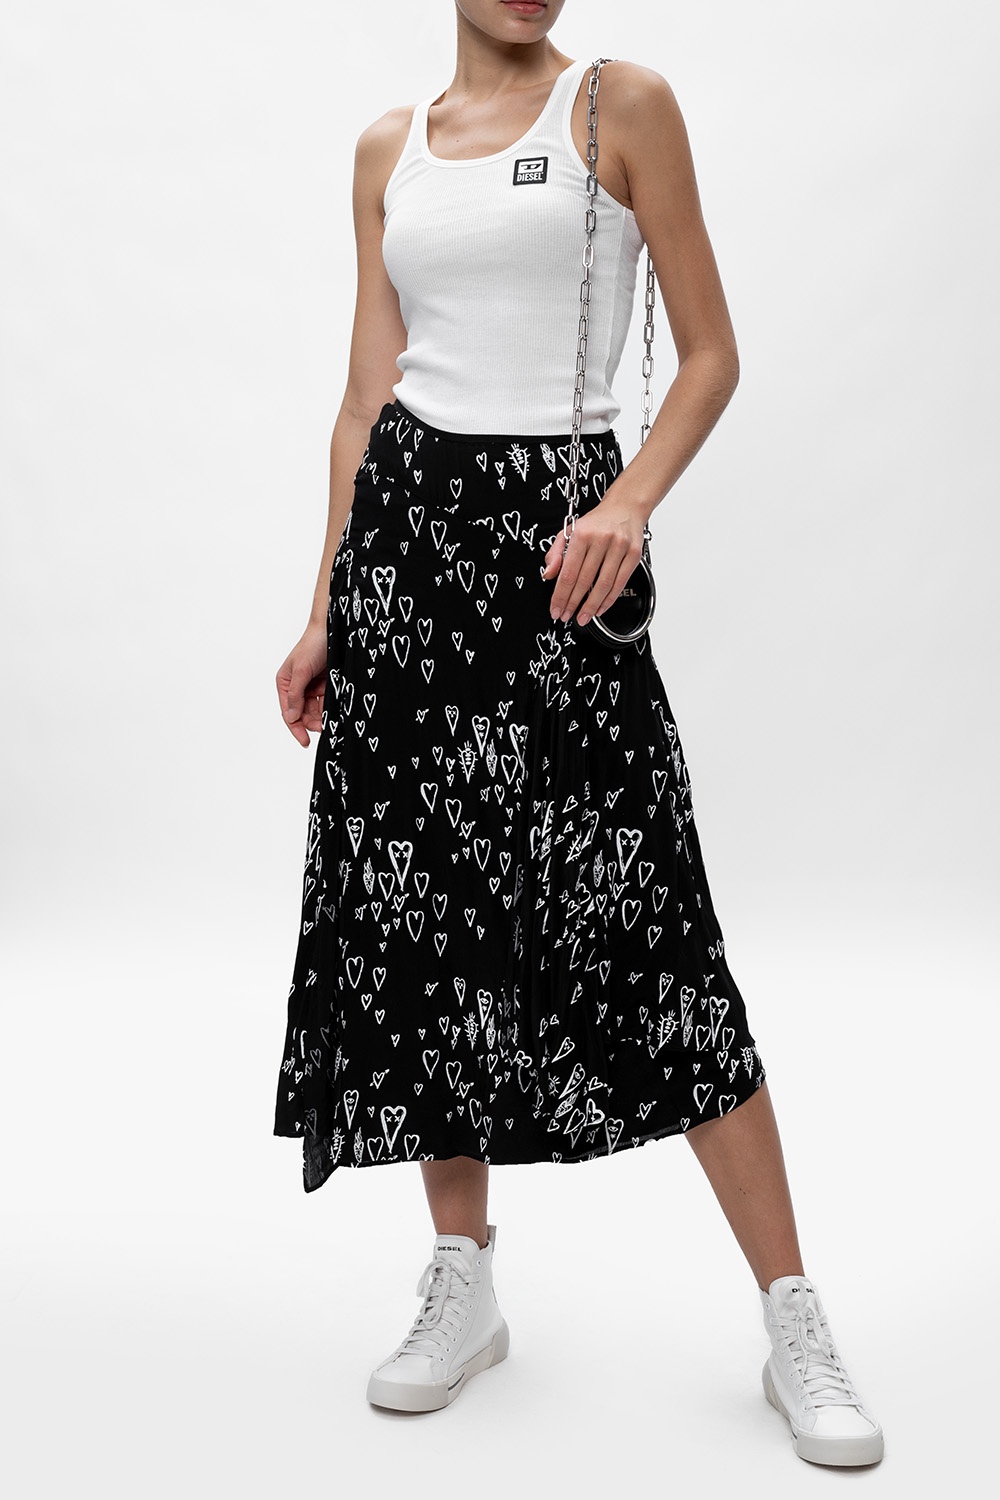 Louis Vuitton Ink Tiger Asymmetrical Pleat Midi Skirt Black White. Size 36